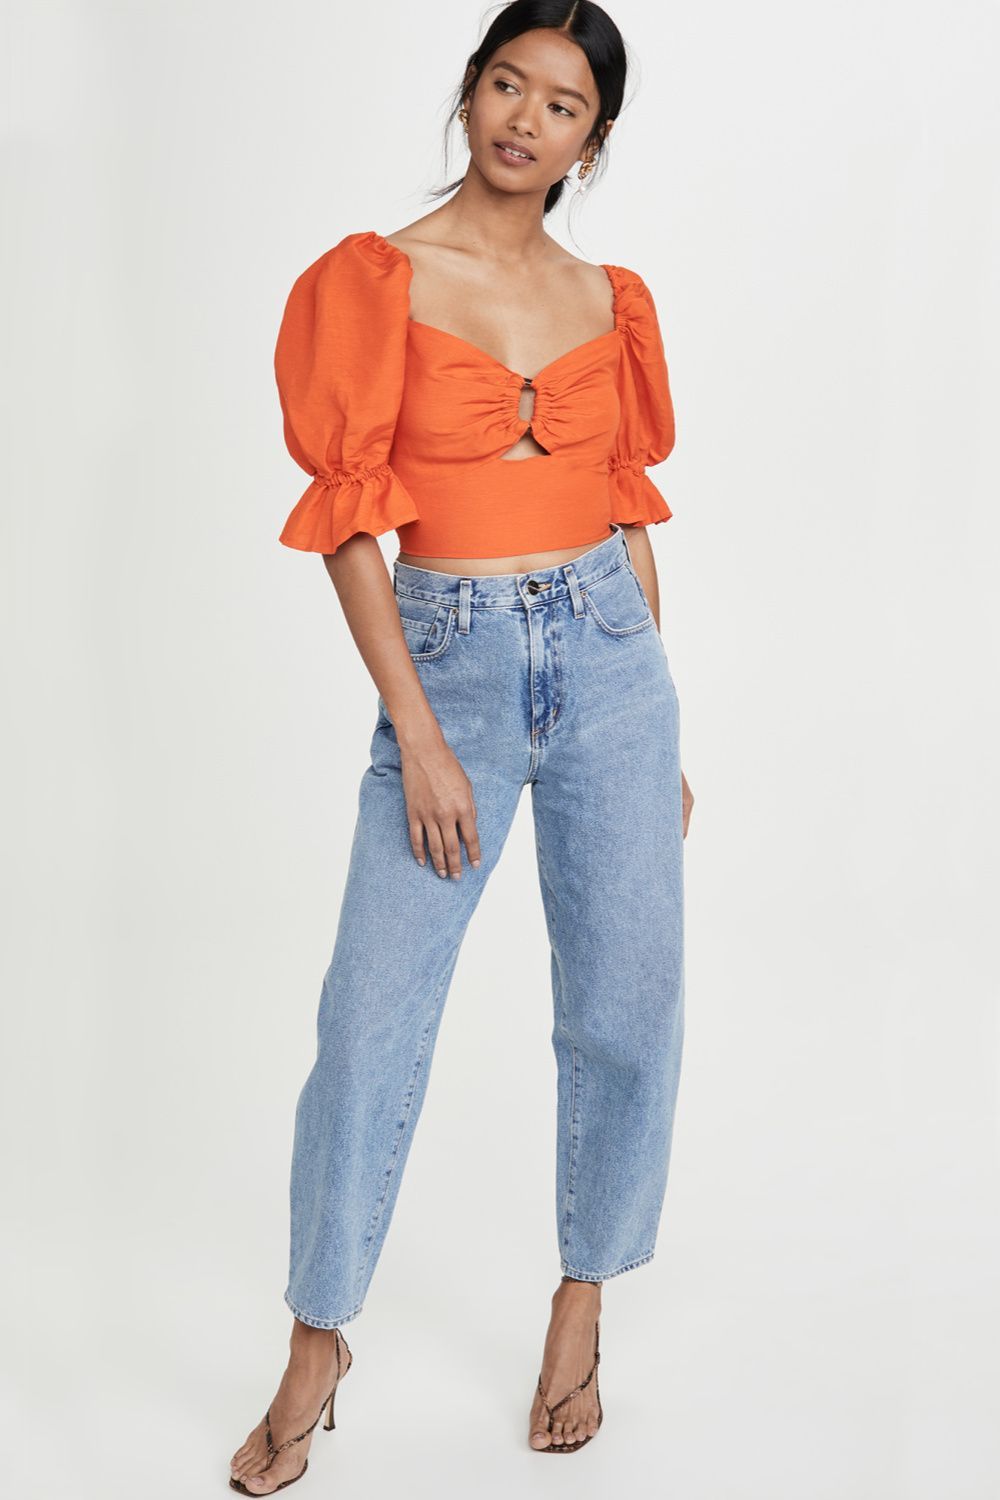 Orange Outfit Ideas for Women to Wear ...